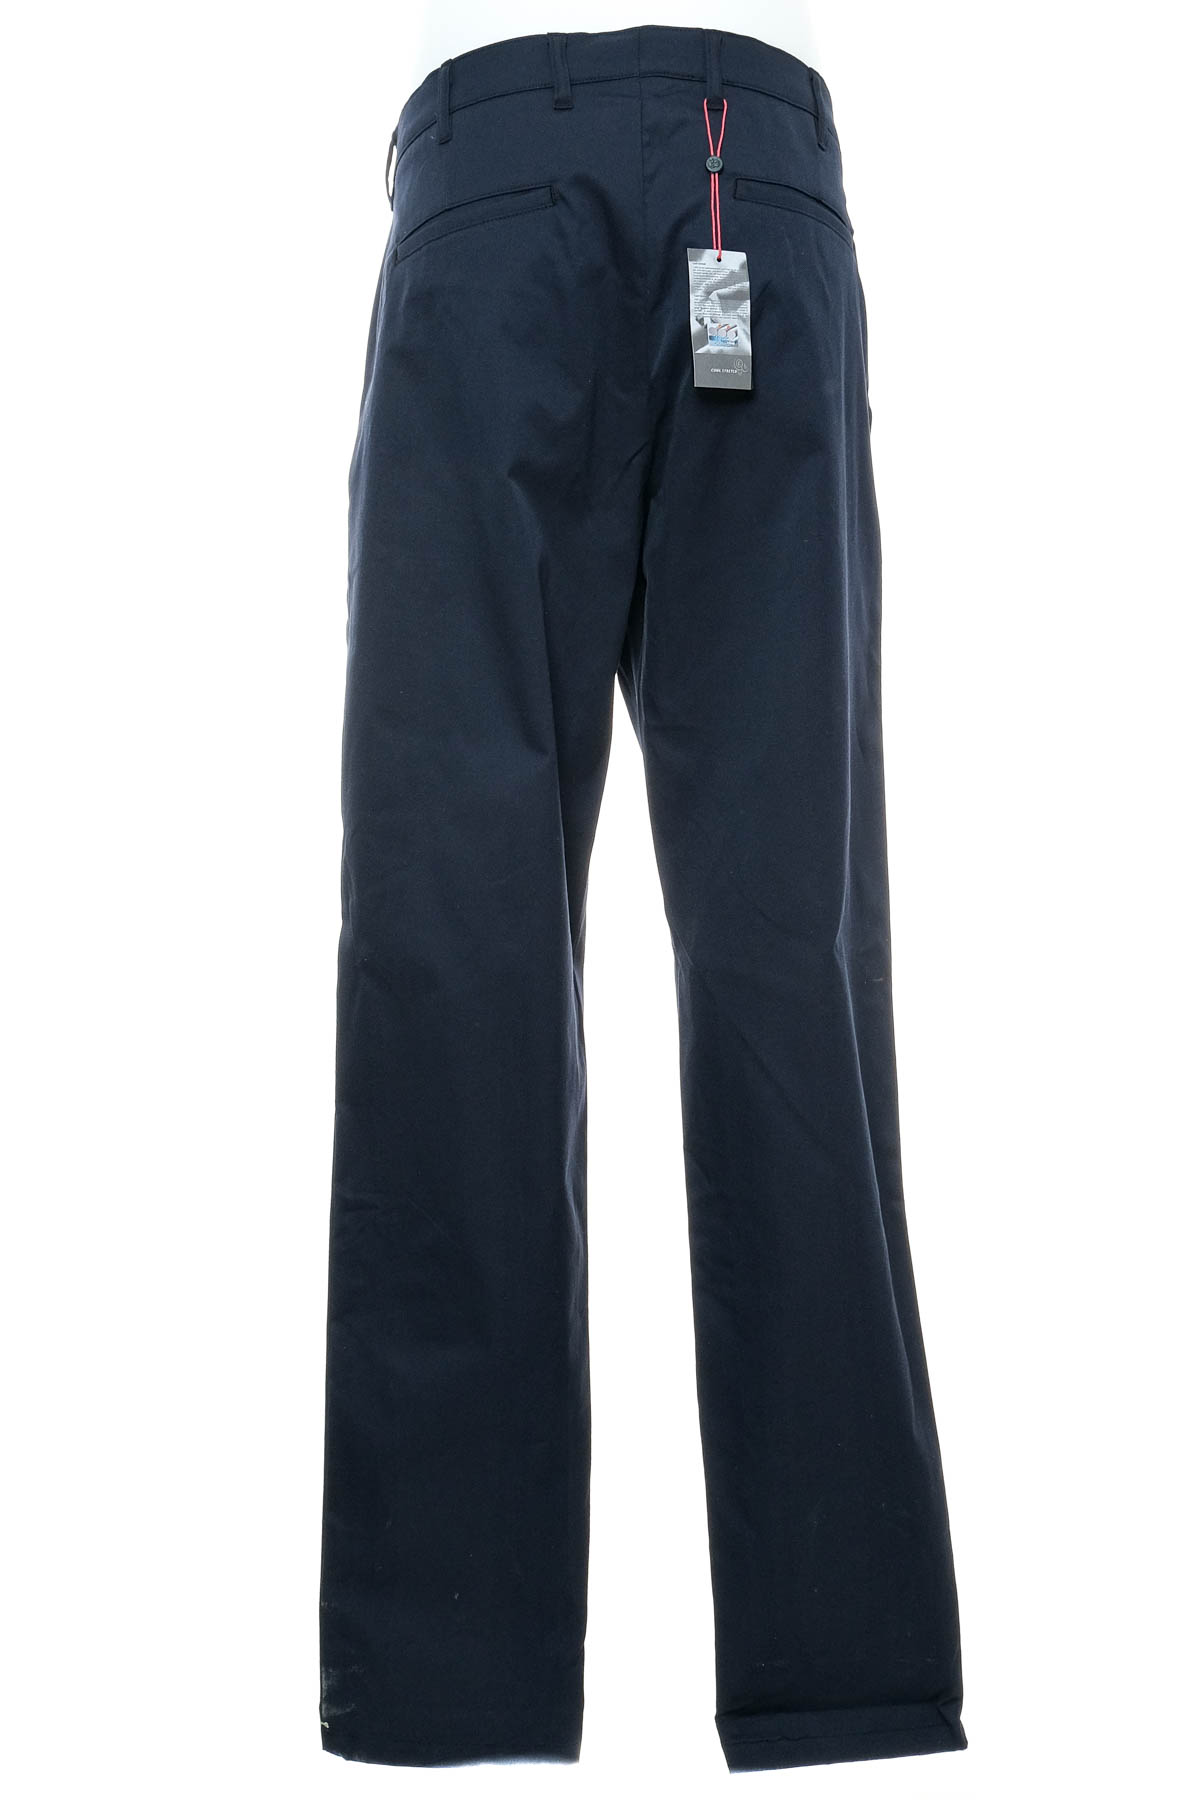 Pantalon pentru bărbați - GREIFF - 1